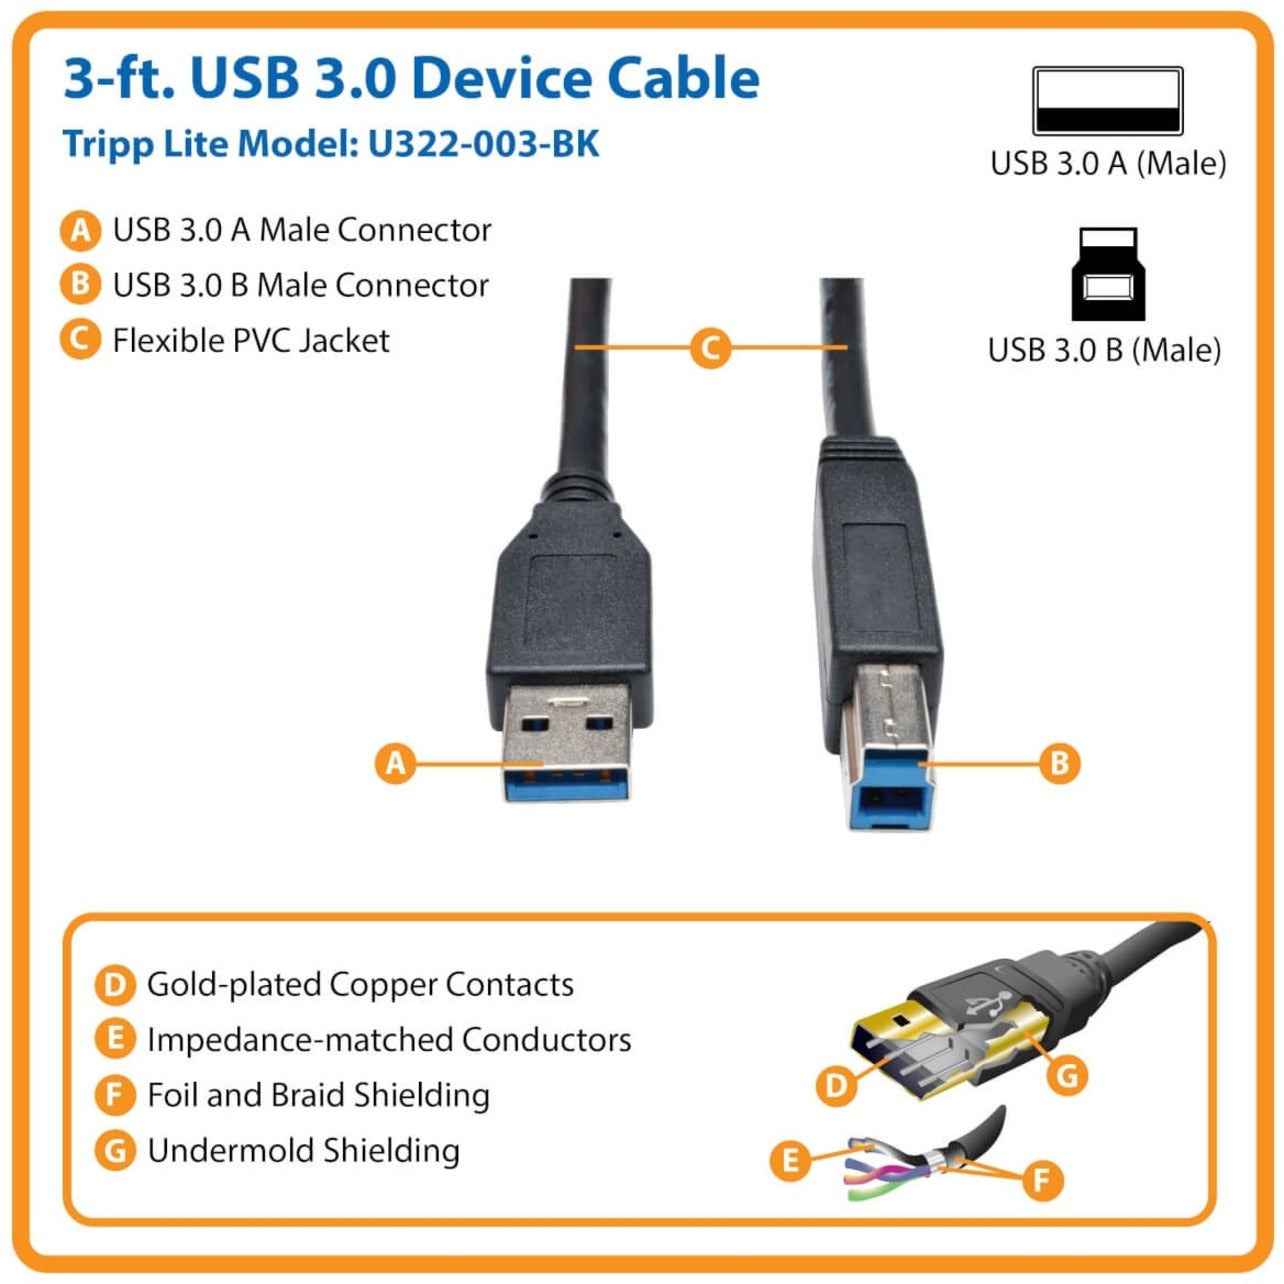 Tripp Lite U322-003-BK USB 3.0 SuperSpeed Device Cable (AB M/M) Black, 3-ft.